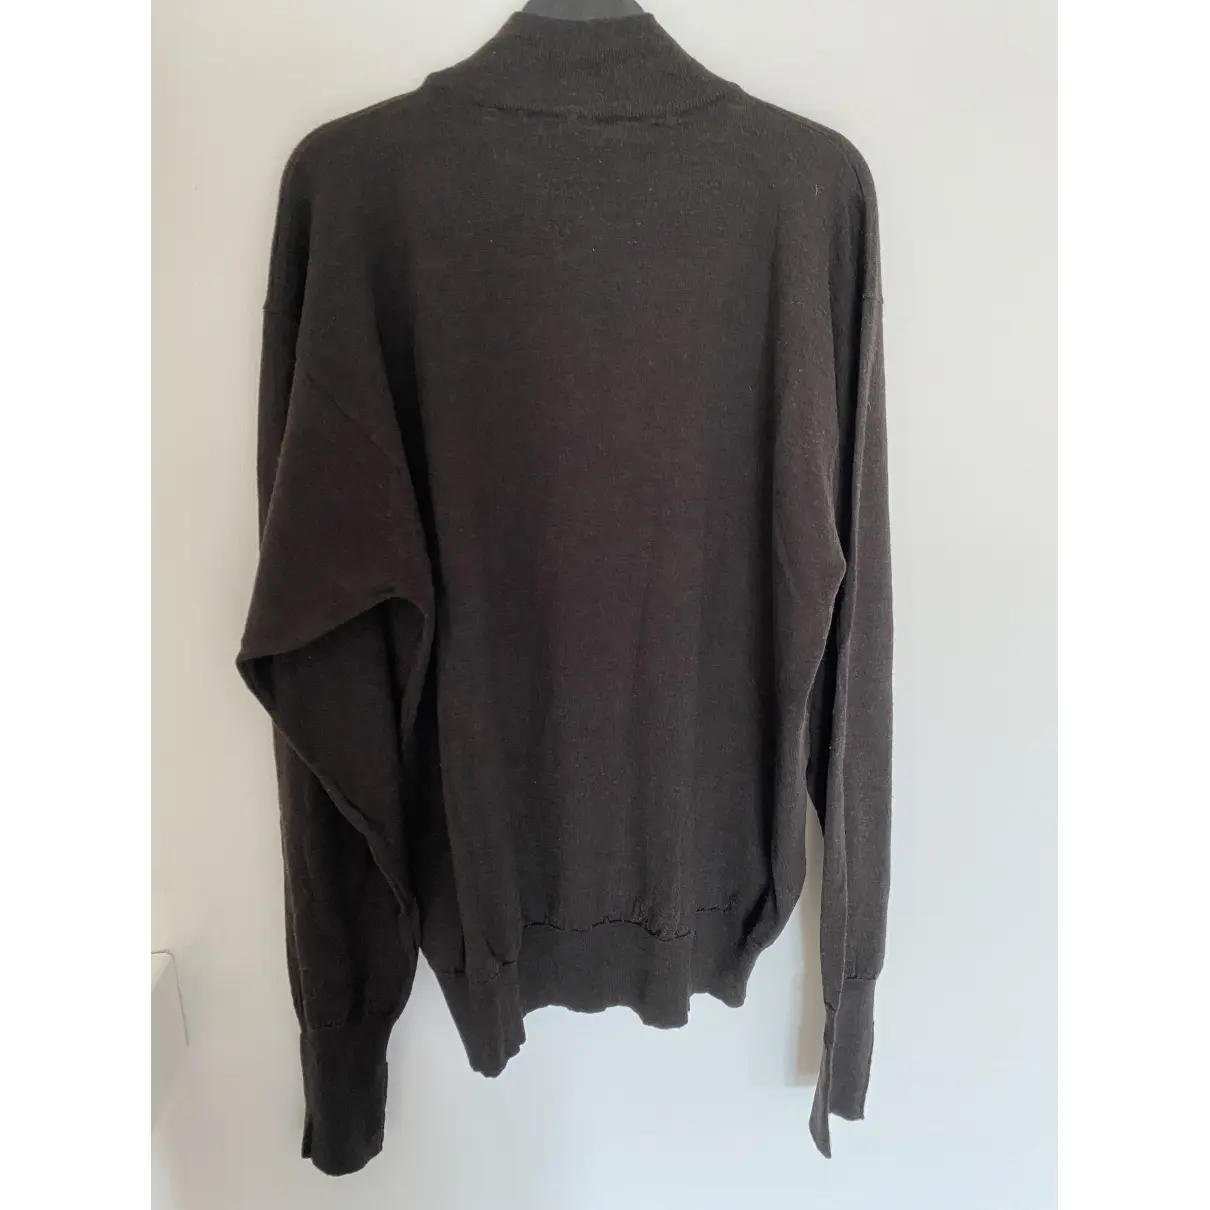 Buy Ermenegildo Zegna Wool sweatshirt online